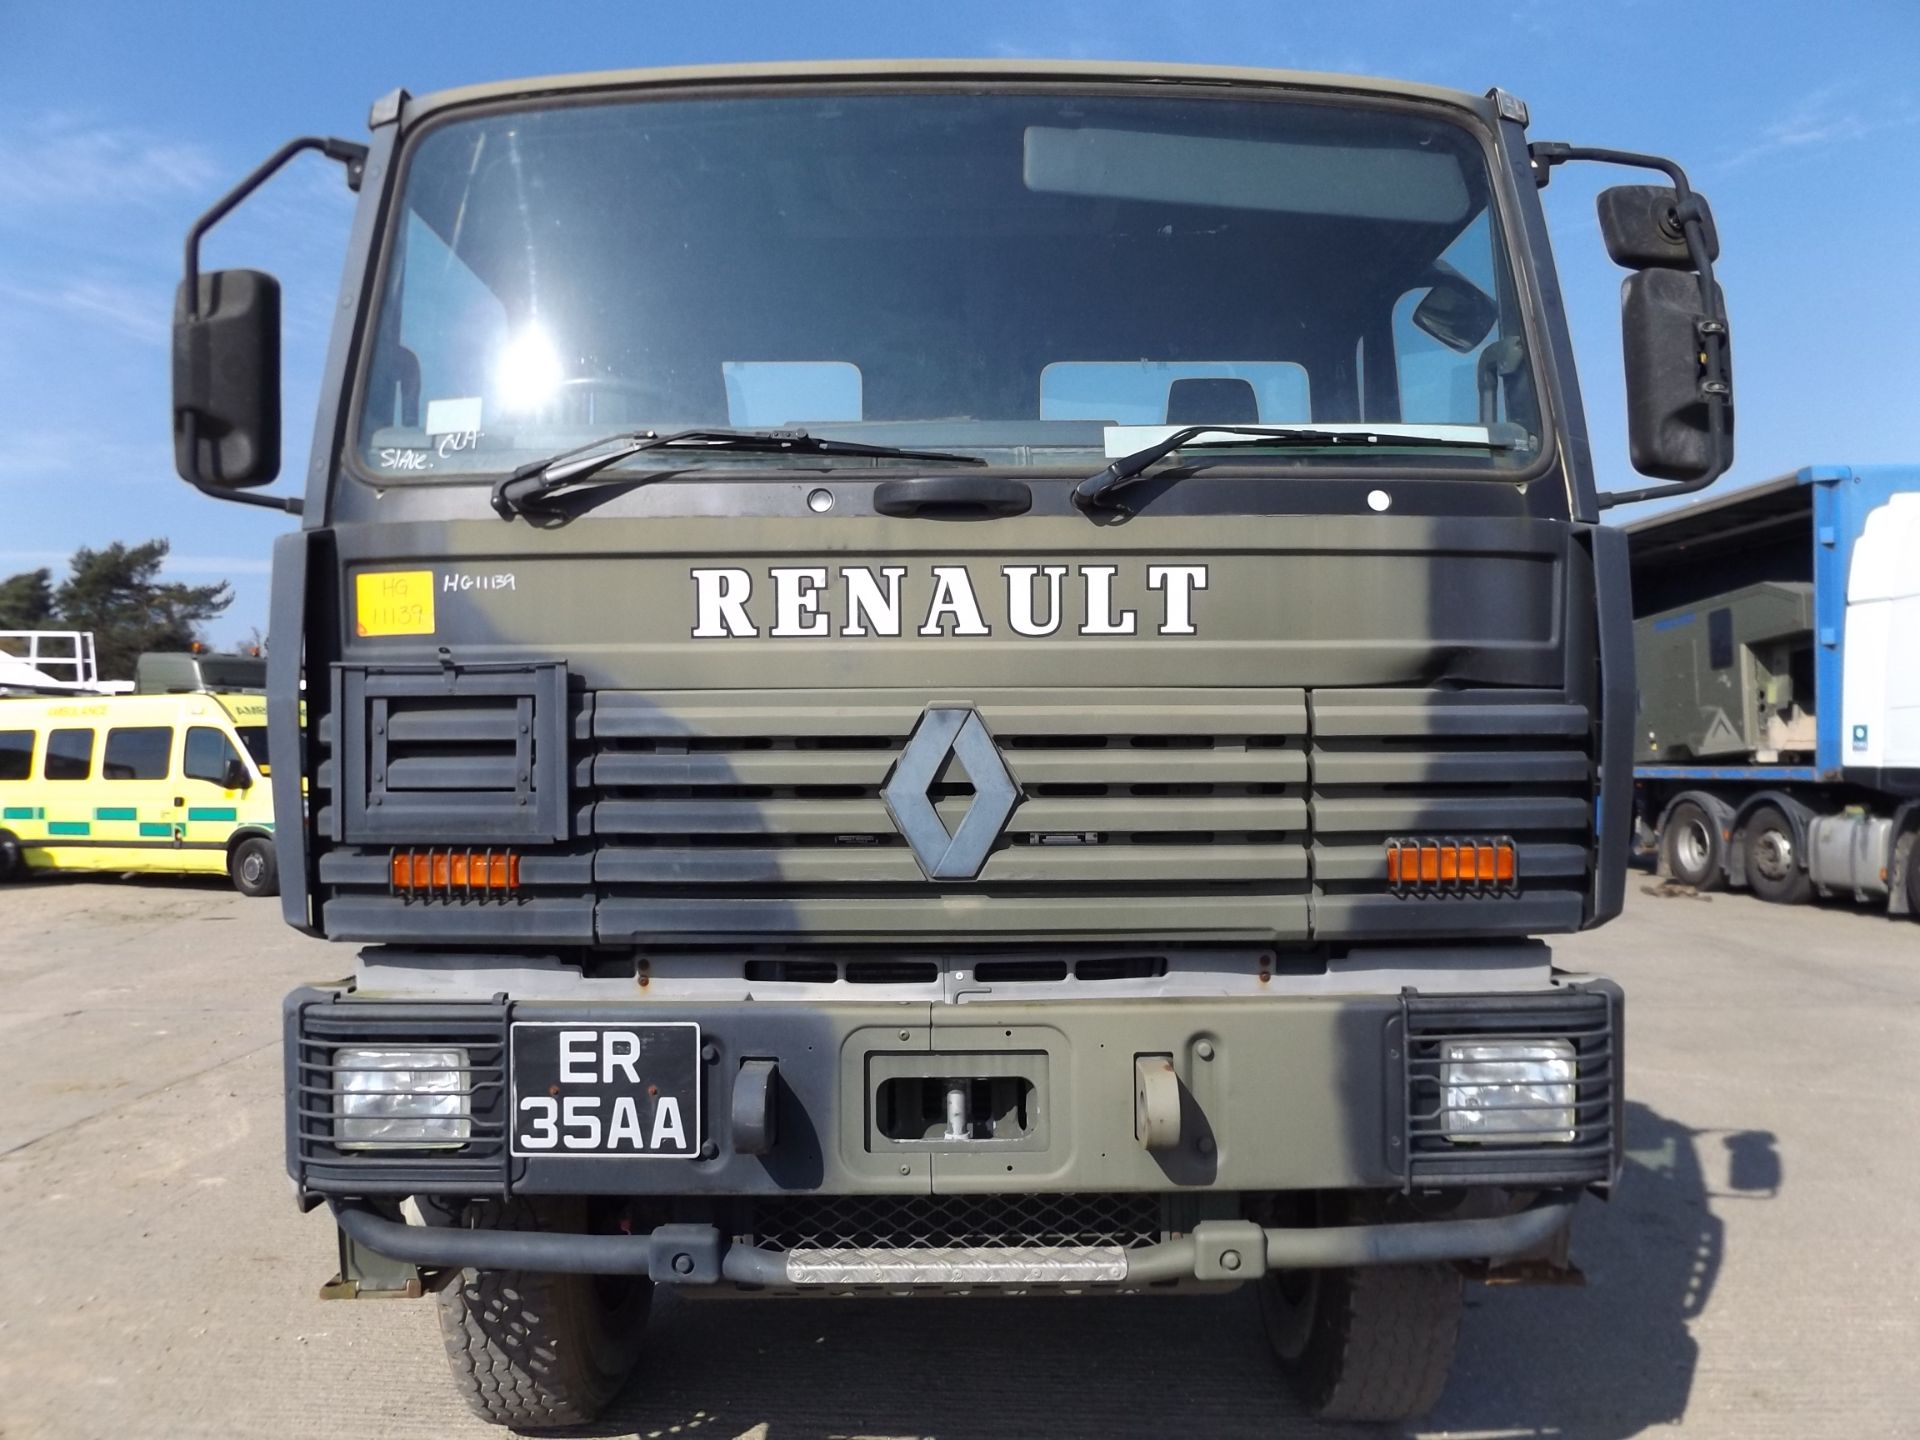 Renault G300 Maxter RHD 4x4 8T Cargo Truck - Image 2 of 20